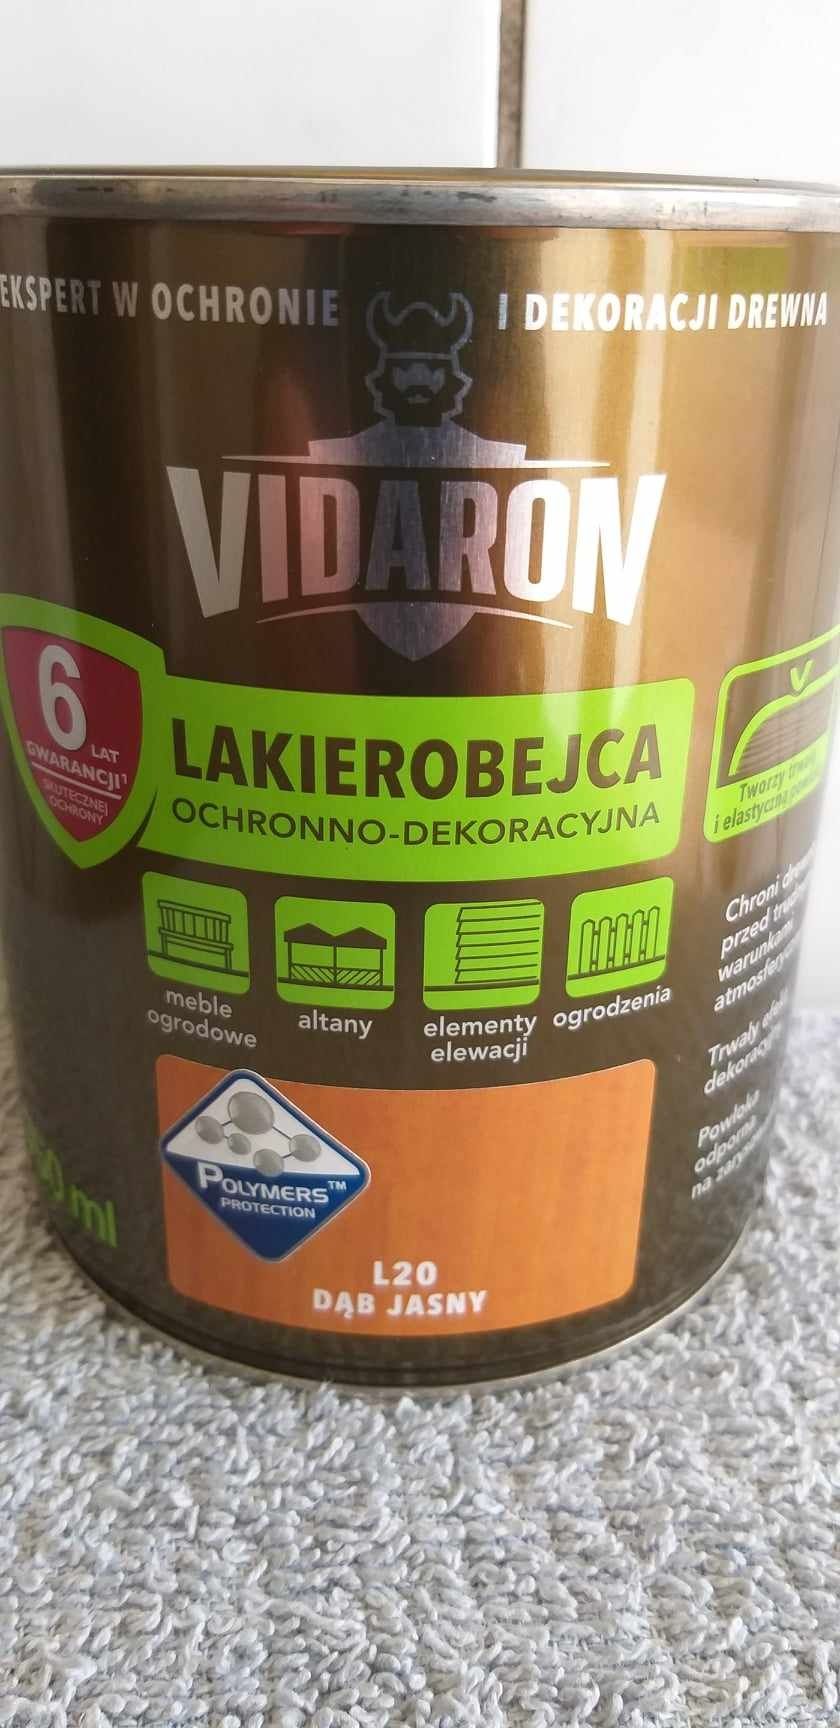 Lakierobejca Vidaron 0.75L.